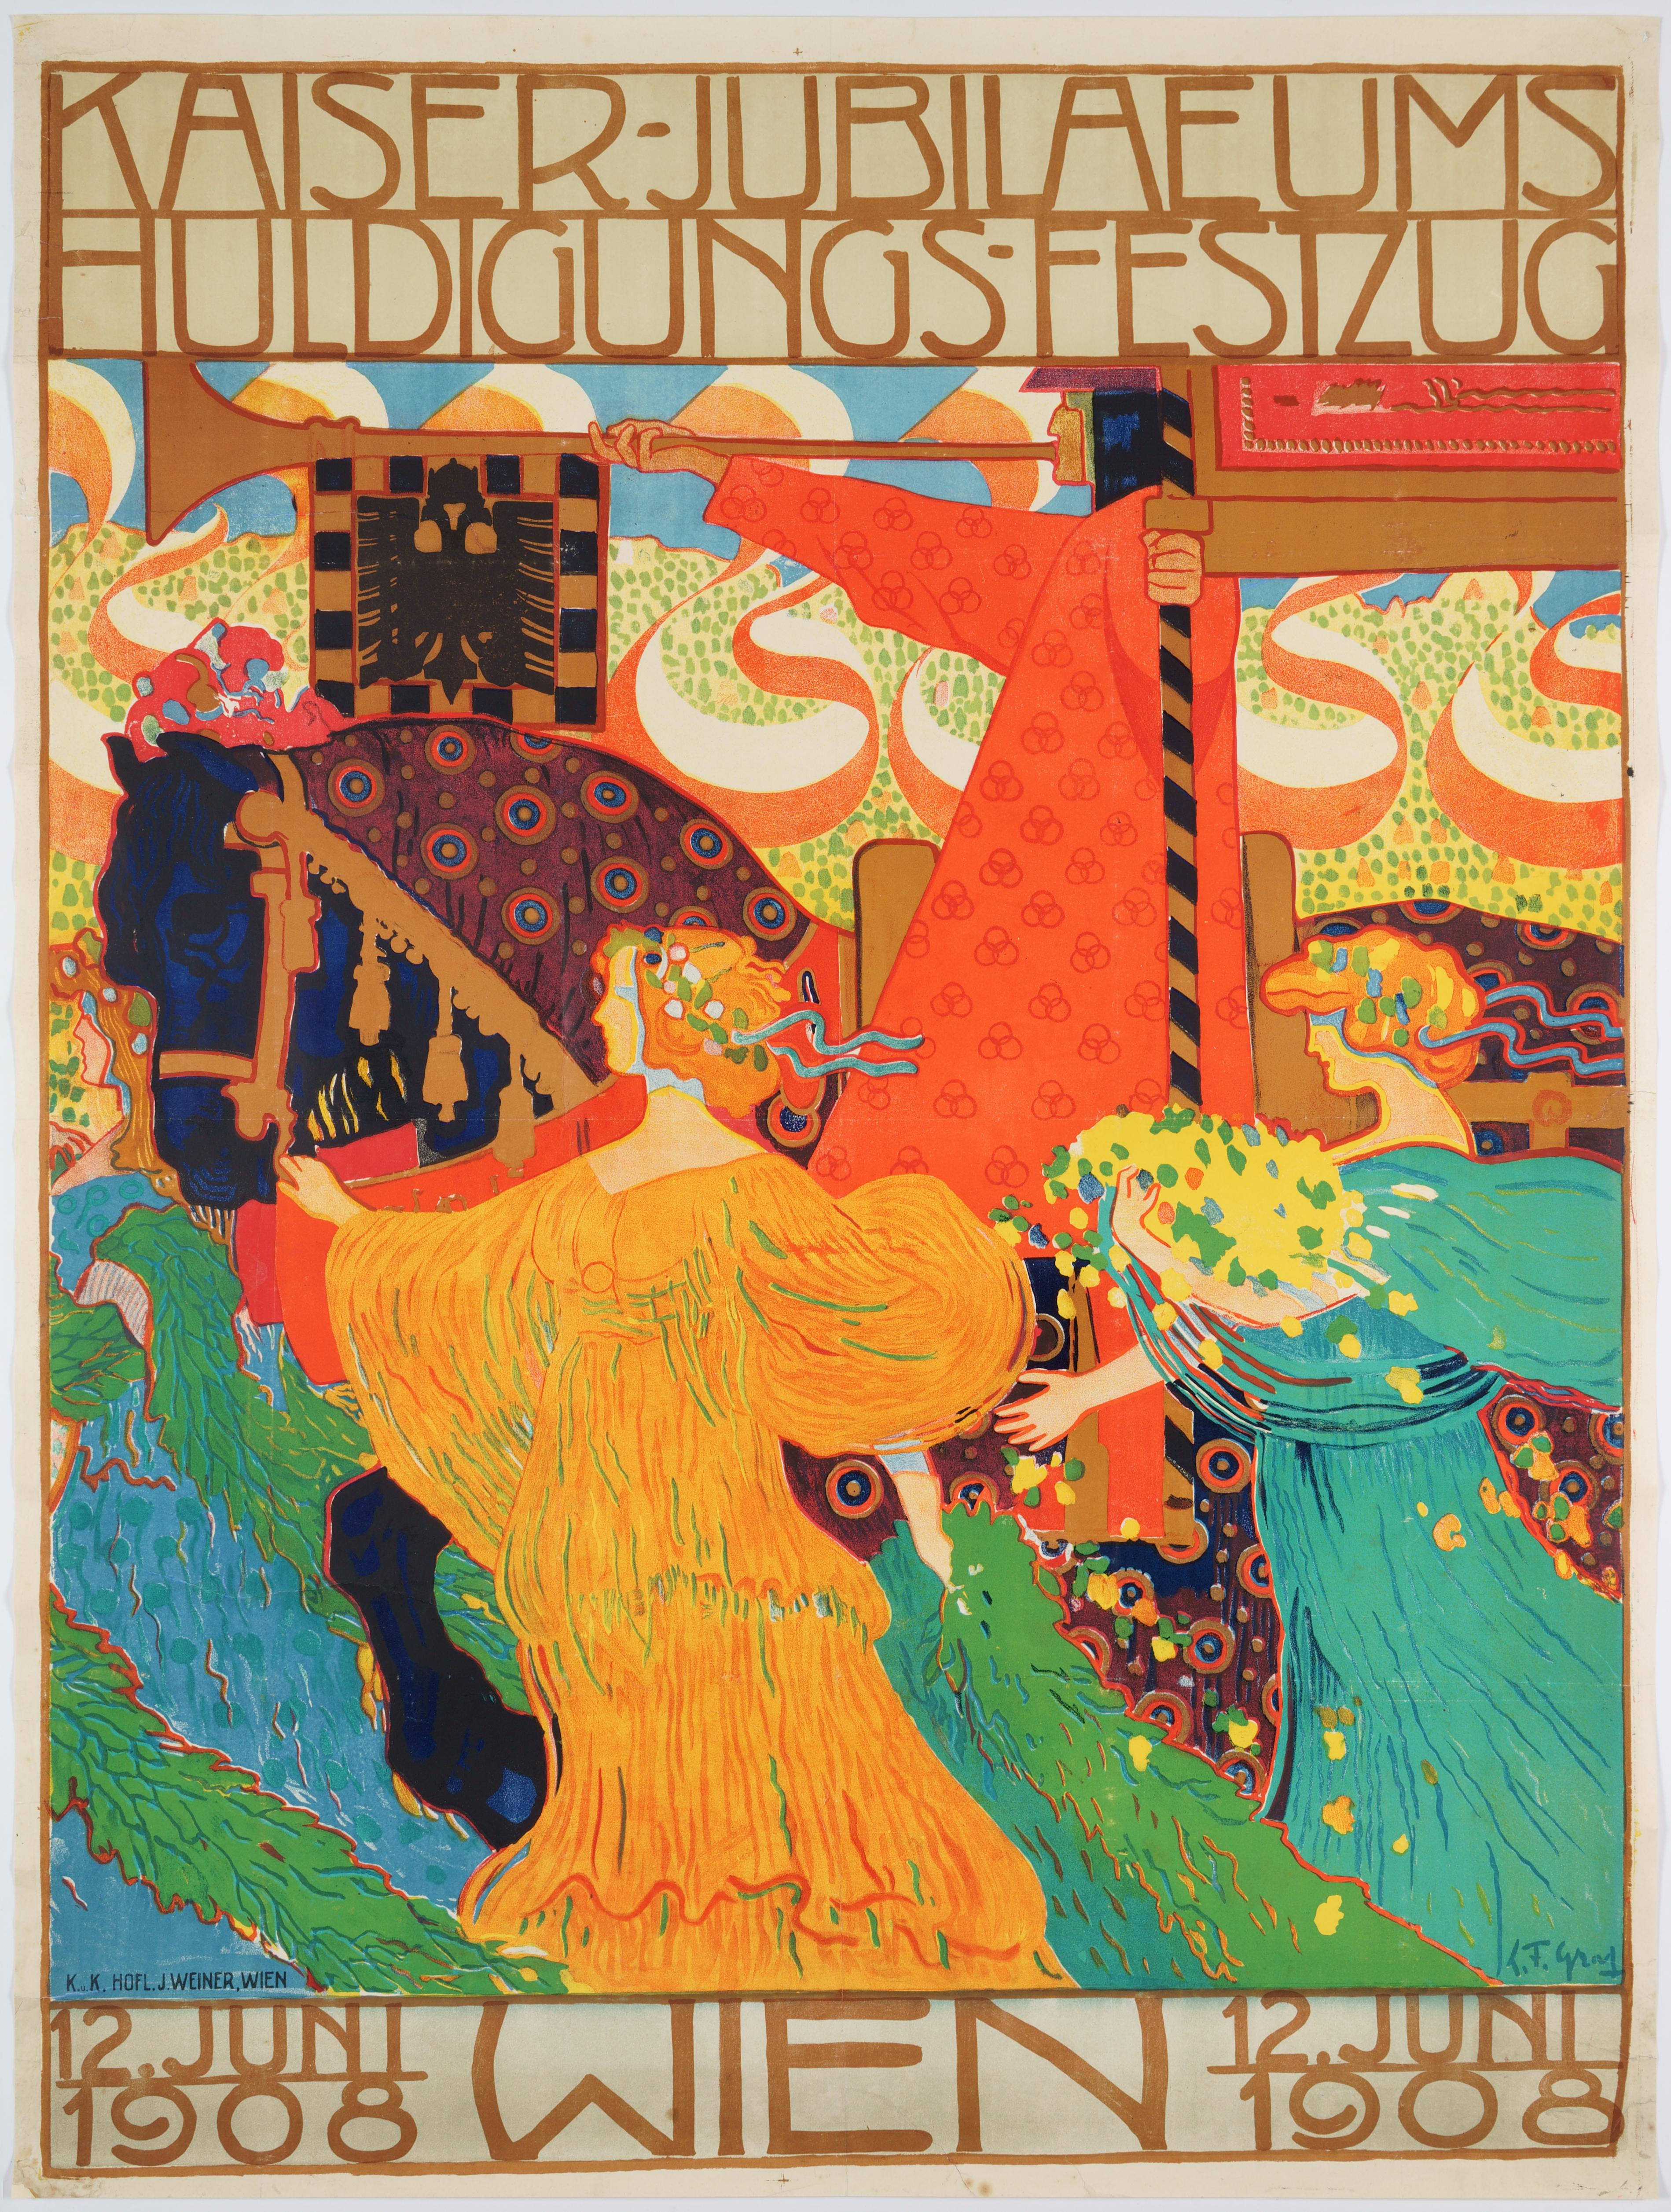 Original Vintage Secession Poster celebrating the emperor's jubilee